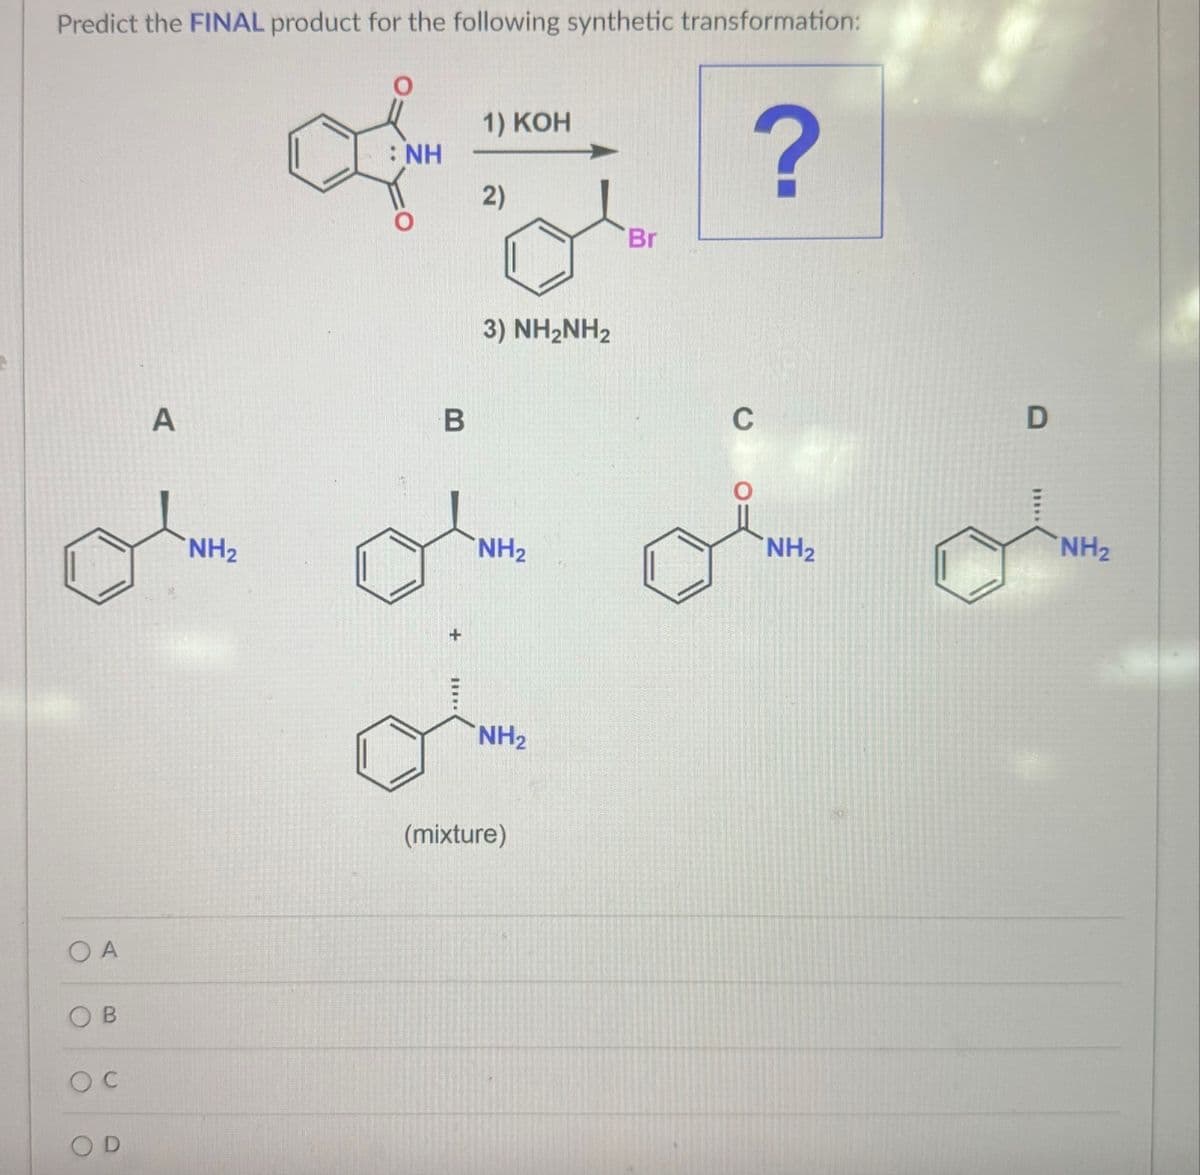 Predict the FINAL product for the following synthetic transformation:
OA
O
O
C
B
O
D
A
: NH
1) KOH
2)
Br
B
3) NH2NH2
?
D
NH2
NH2
NH2
NH2
NH2
(mixture)